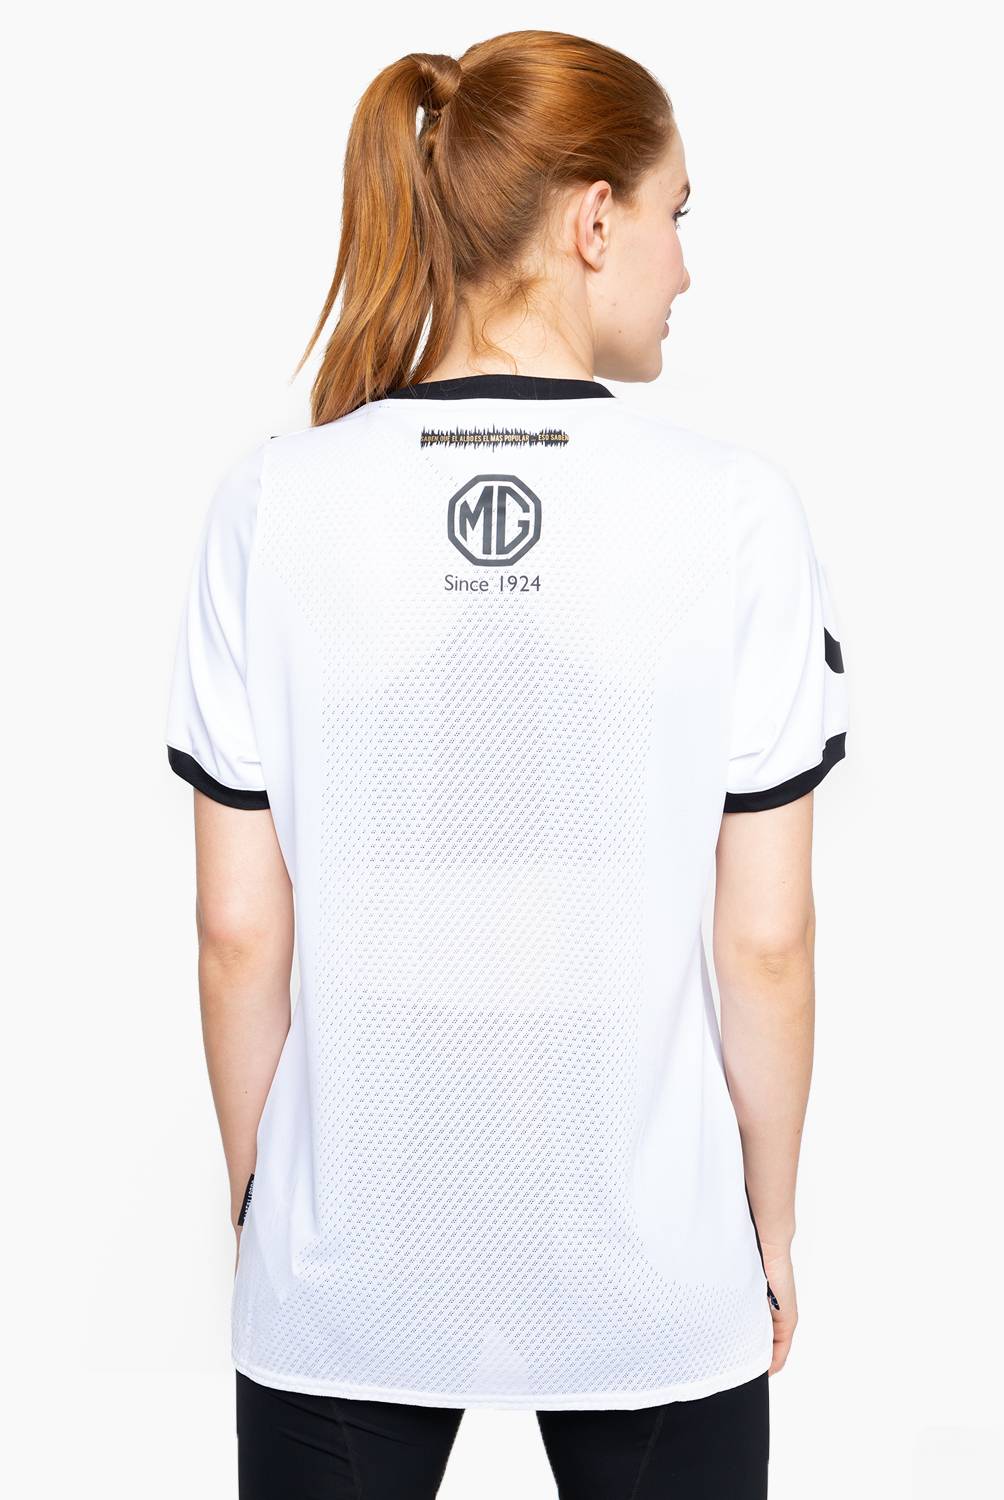 Umbro - Camiseta de Fútbol Mujer 91776U-KIT